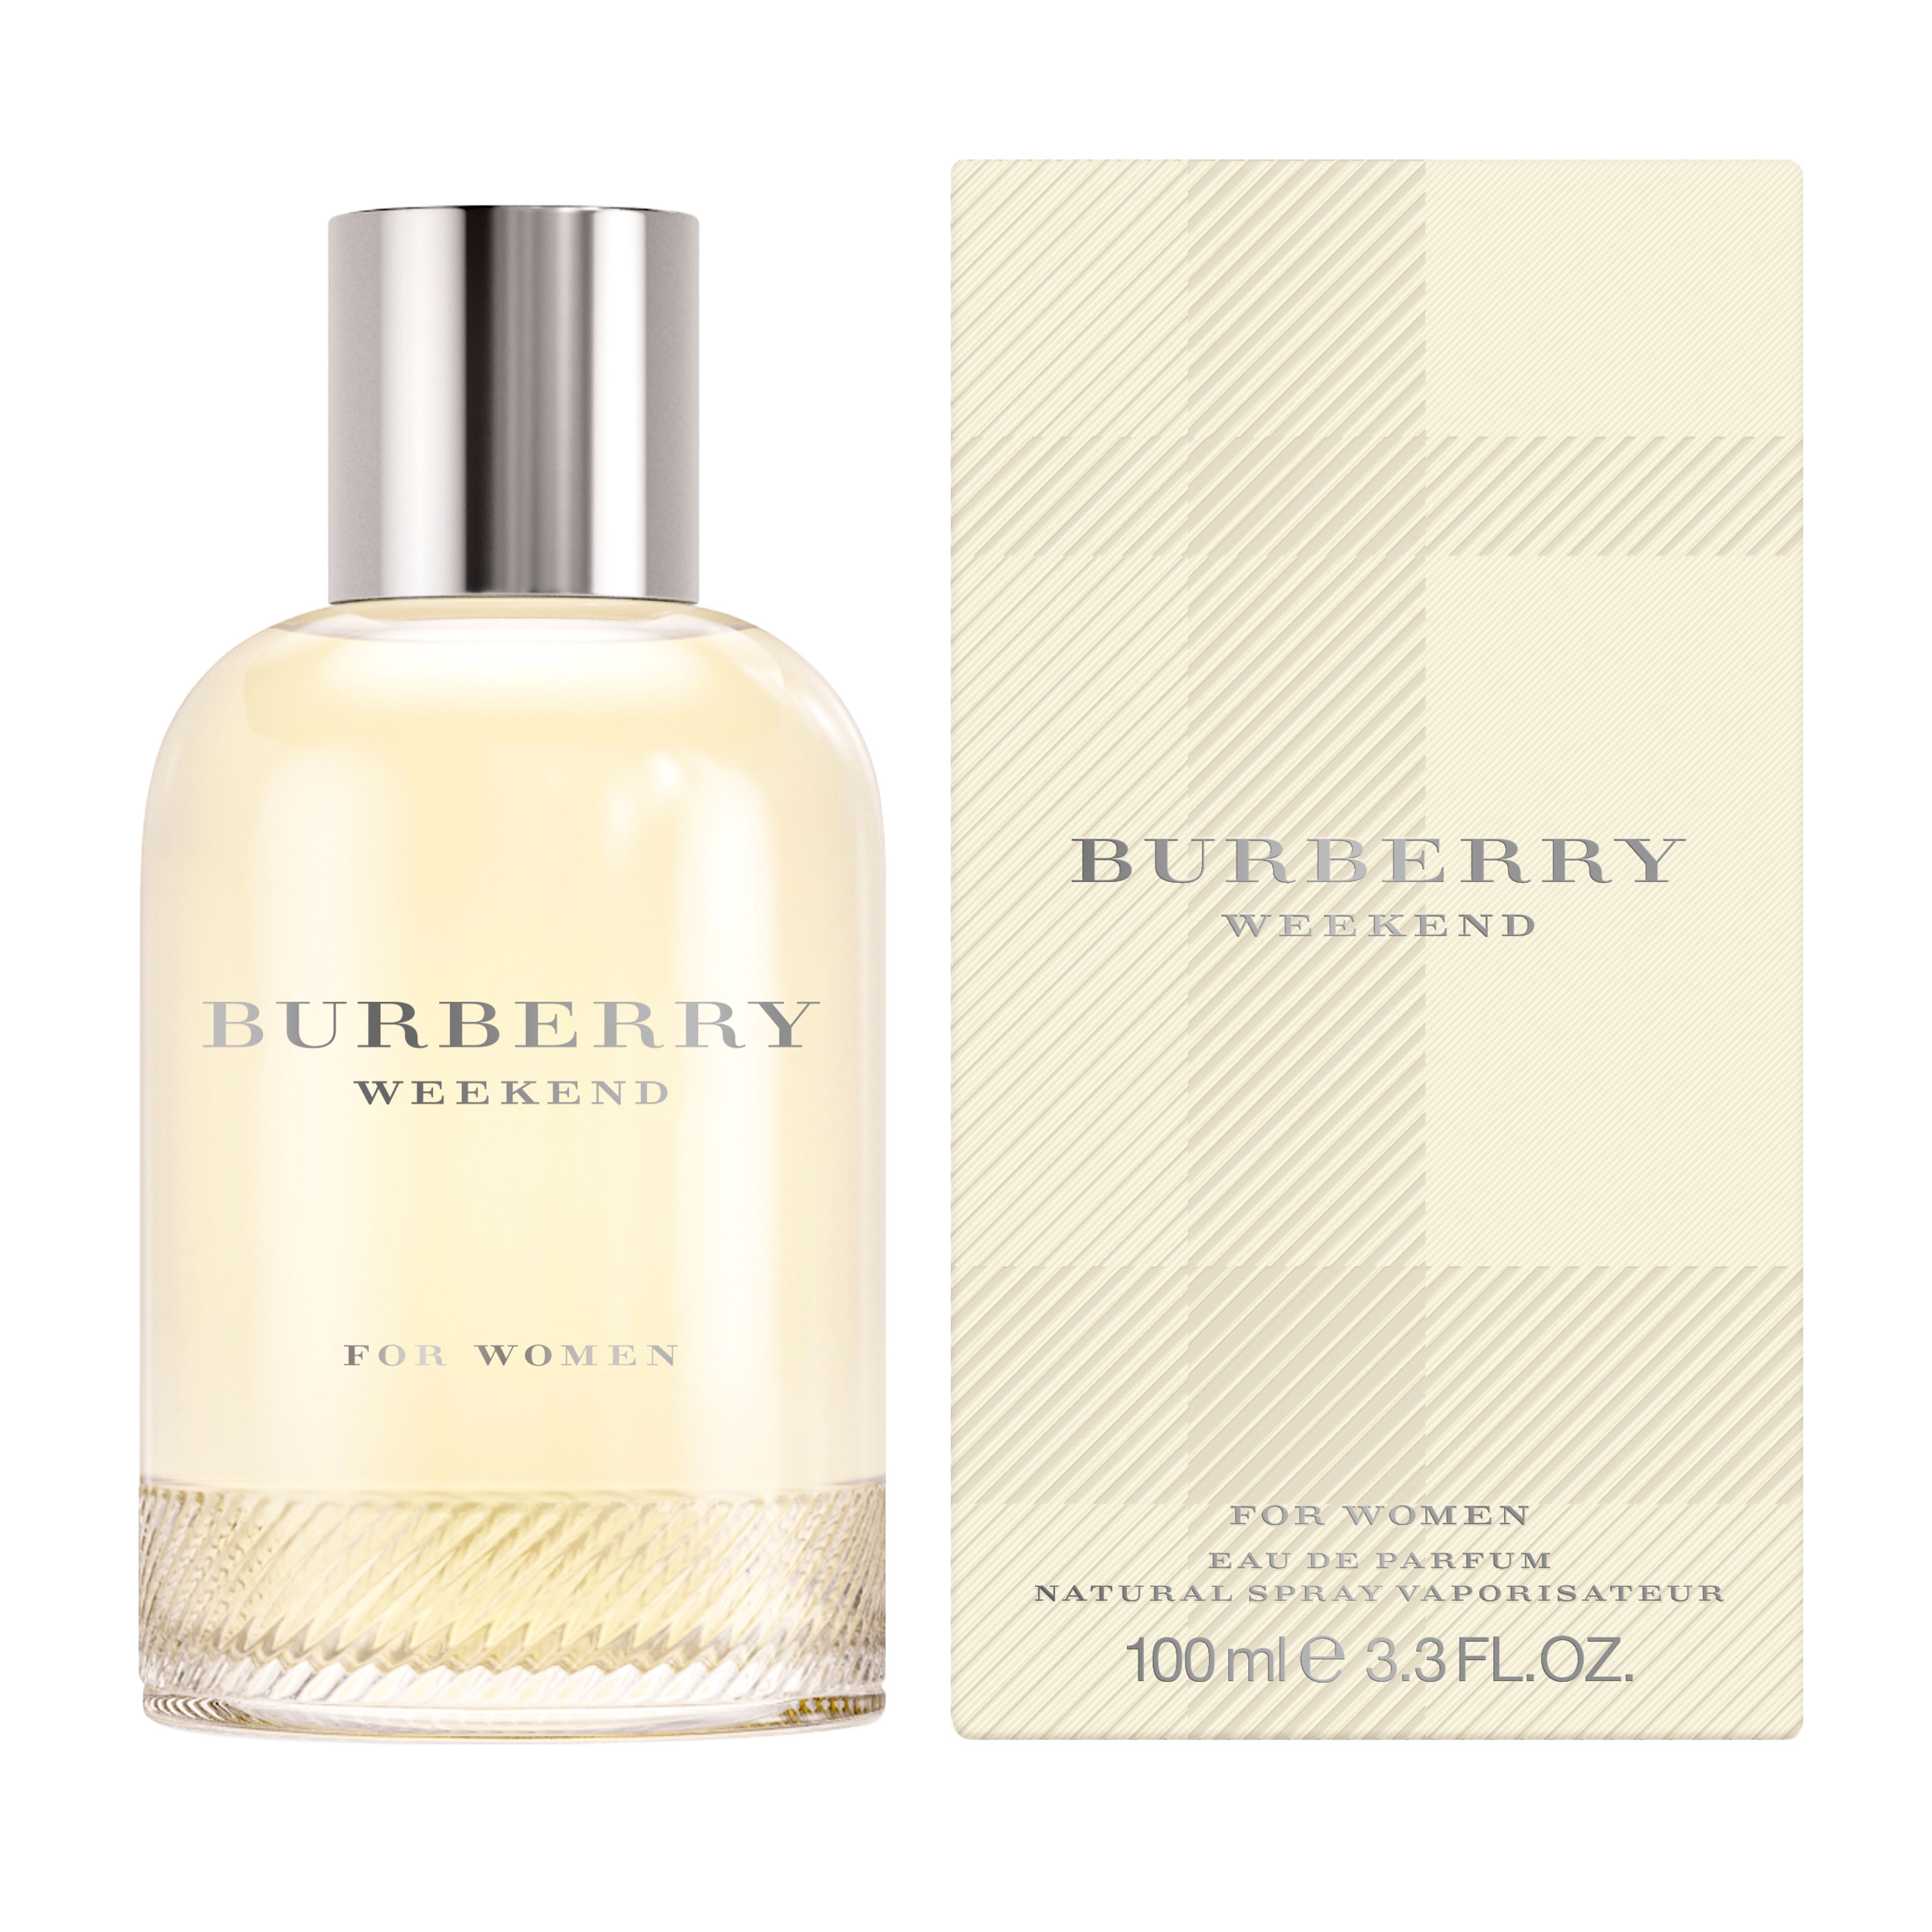 Burberry Burberry Weekend Eau De Parfum 1